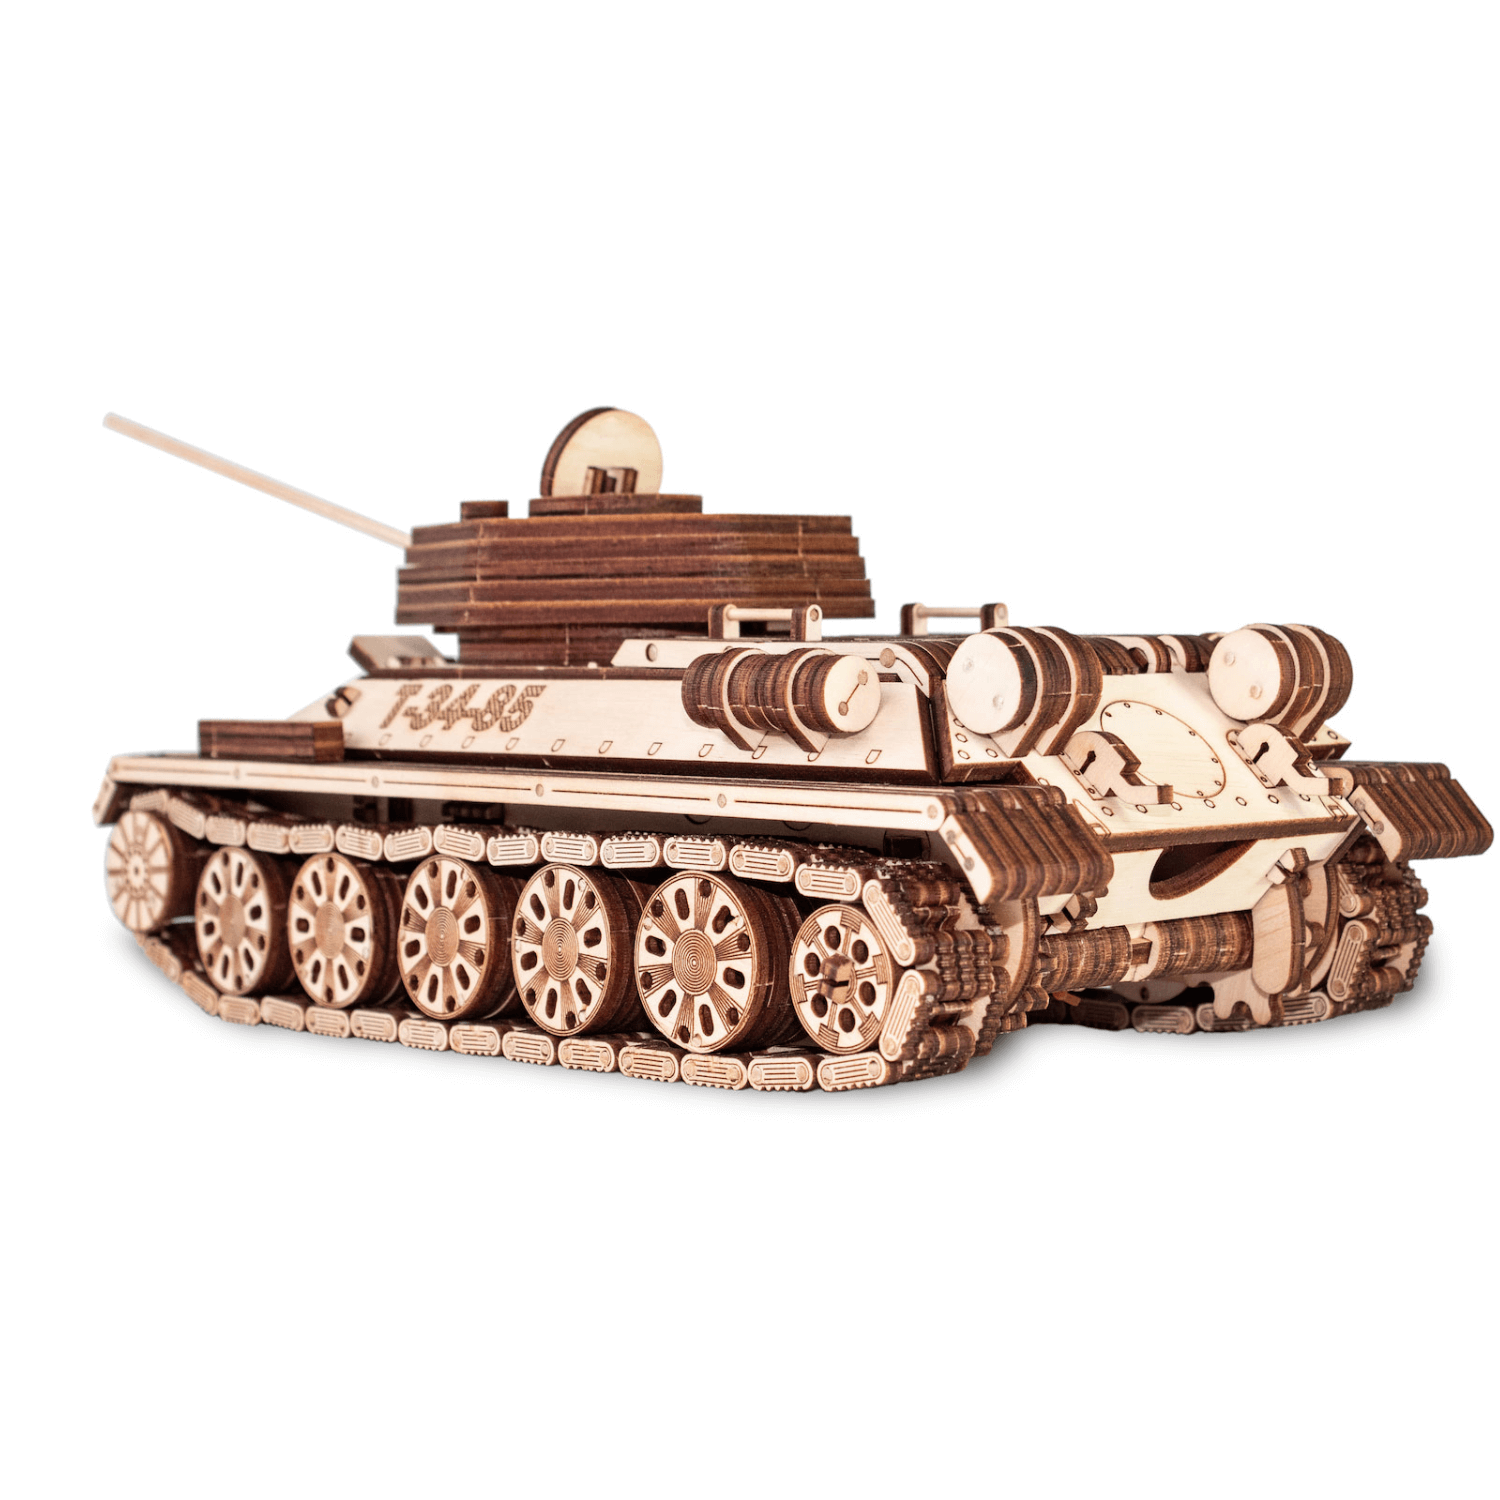 TANK T-34-85 | Tank-Mechanische Houten Puzzel-Eco-Hout-Kunst...